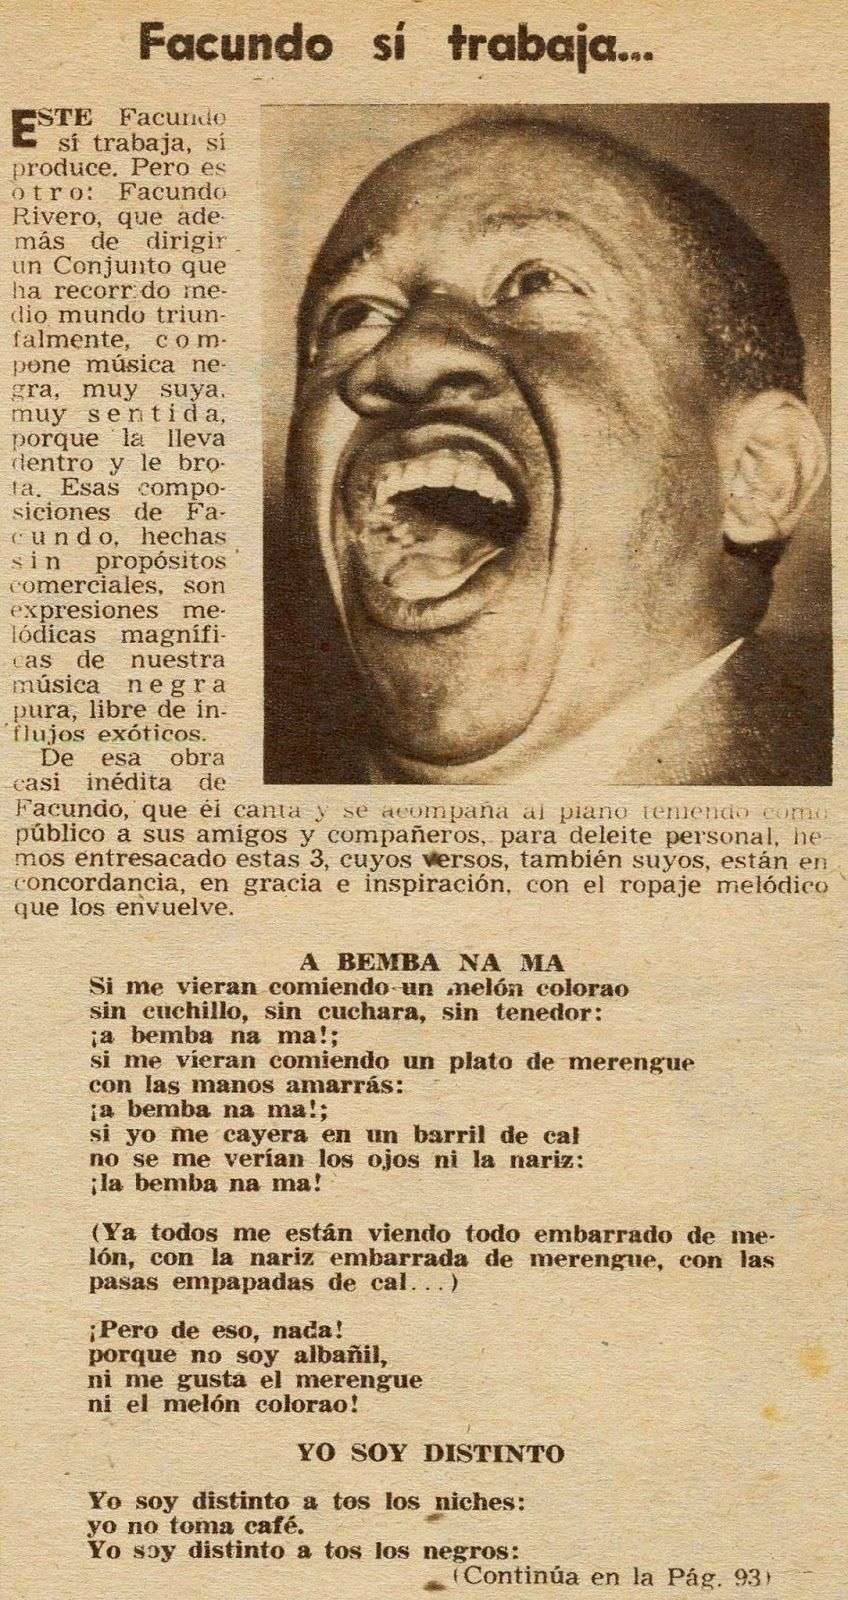 Bohemia, Año 47, Nº 5, La Habana, 30 de enero de 1955.